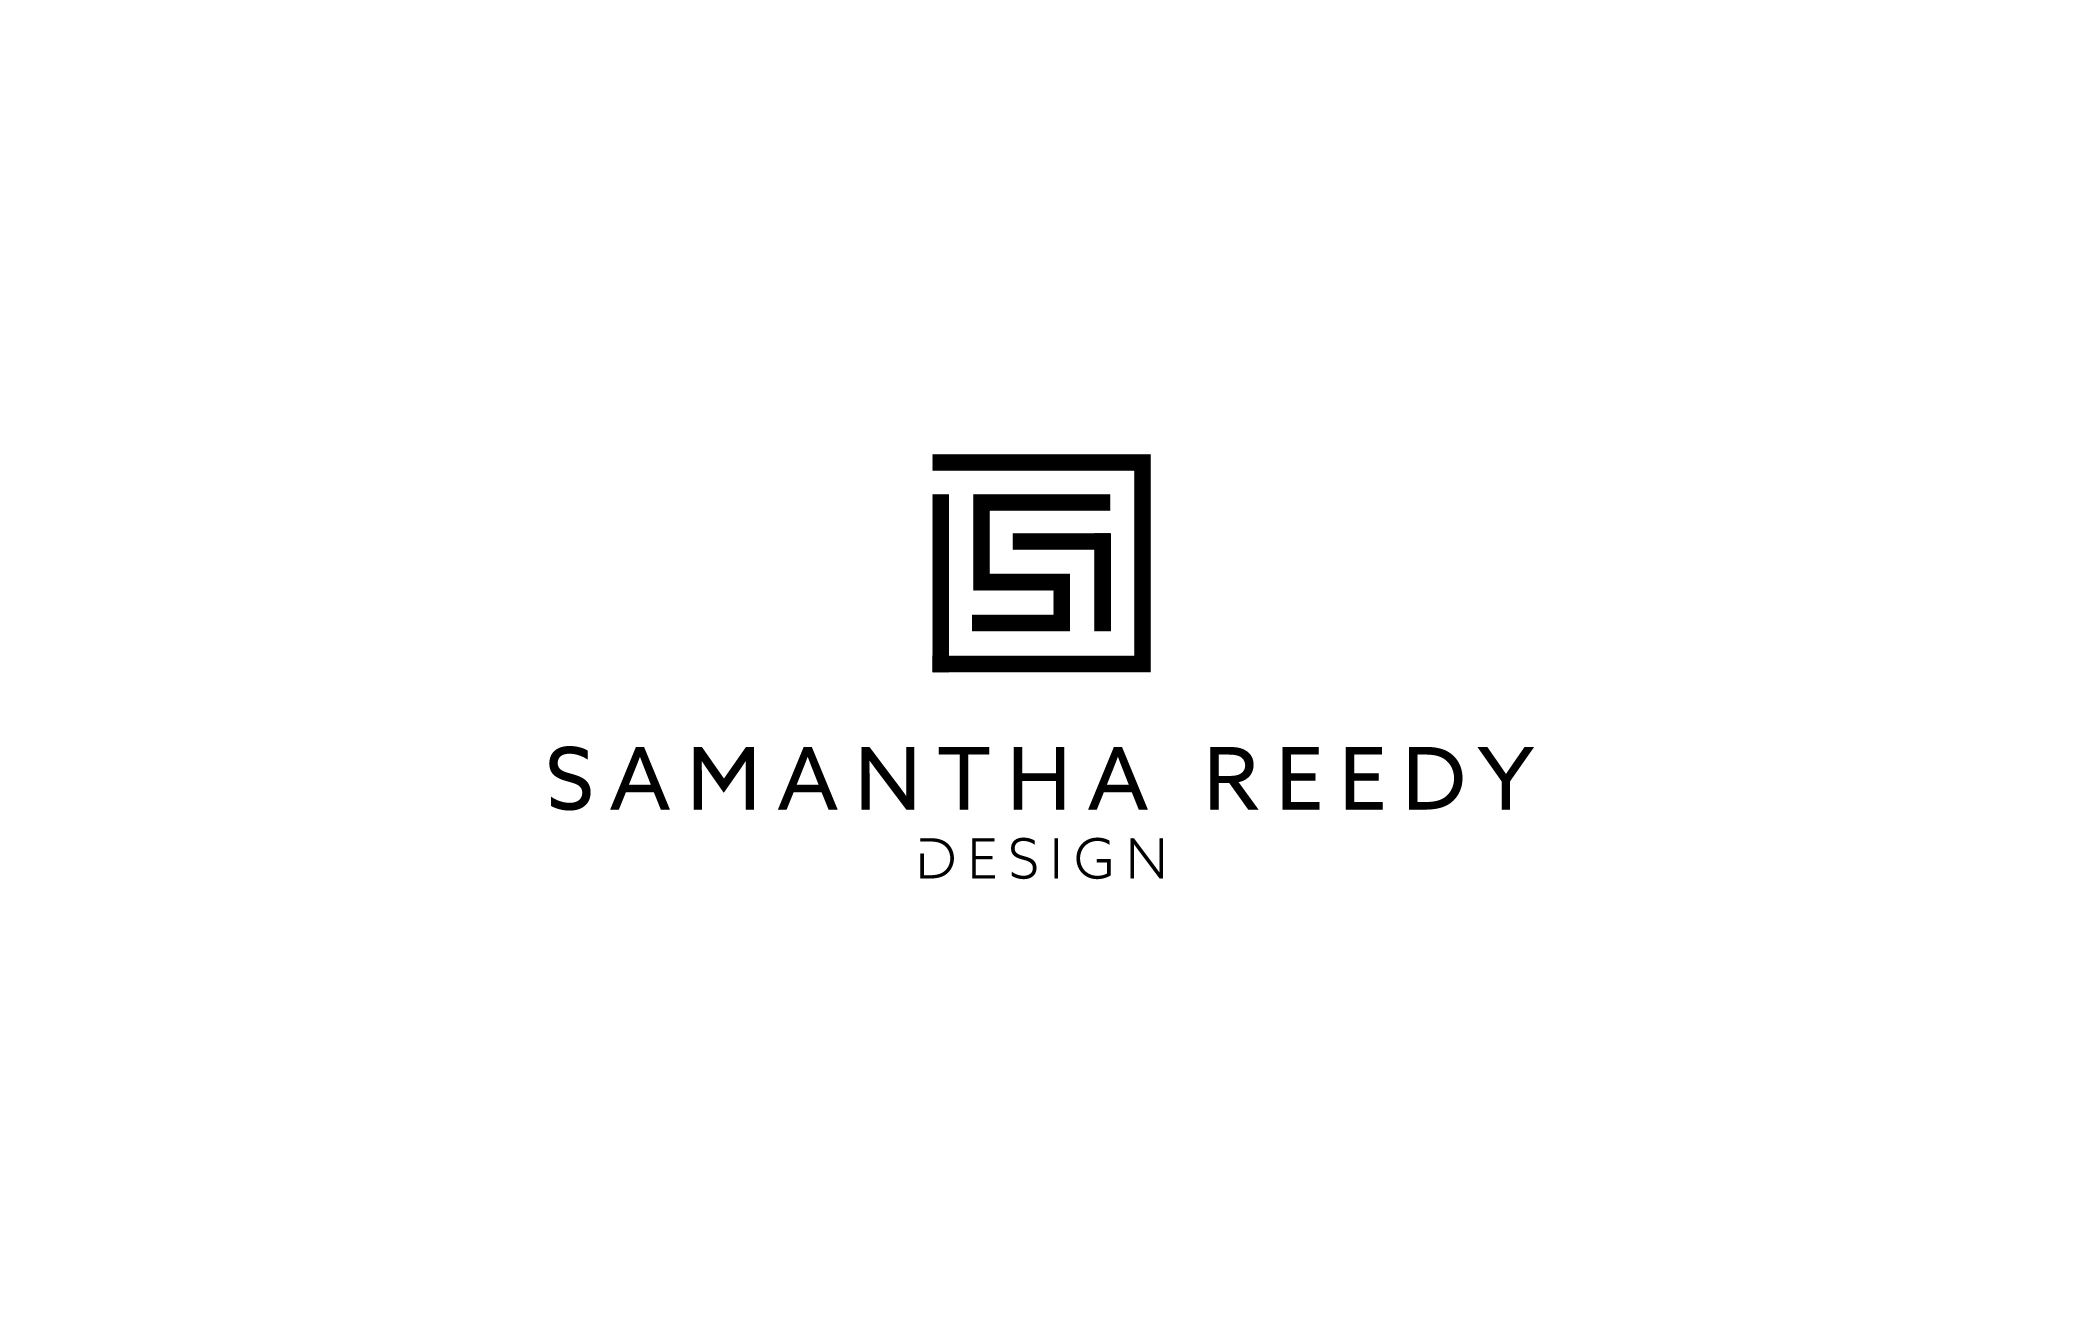 Samantha Reedy Design logo